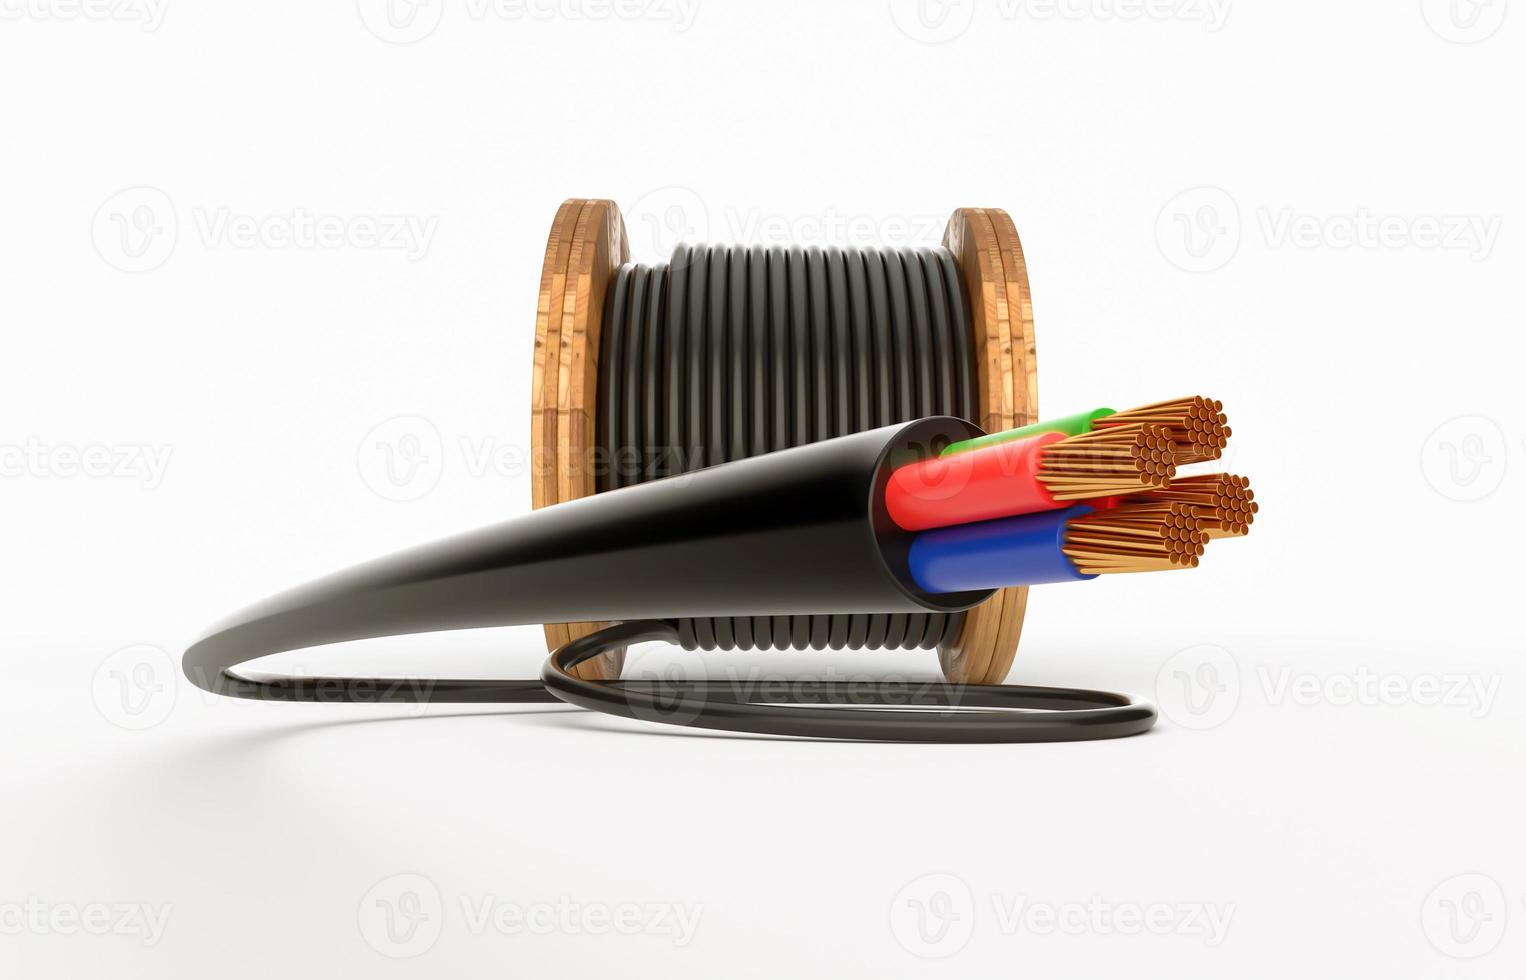 spole av kabel kabel trumma industriell slangrulle koppar elektrisk tråd 3d illustration foto